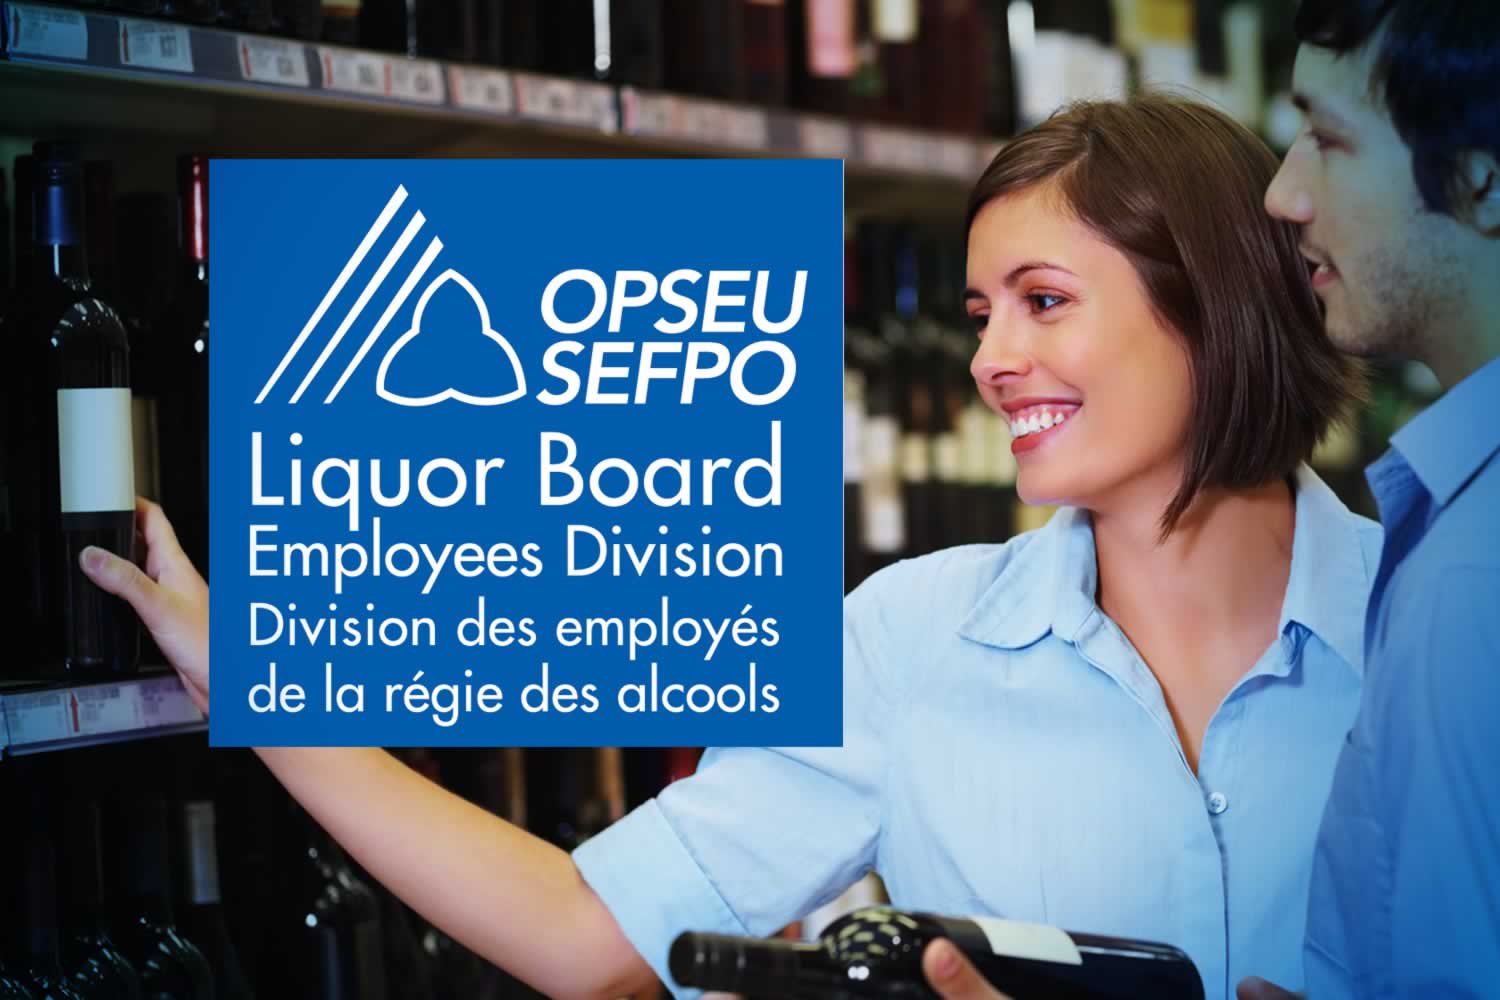 OPSEU/SEFPO Liquor Board Employees Division / Division des employes de la regie des alcools